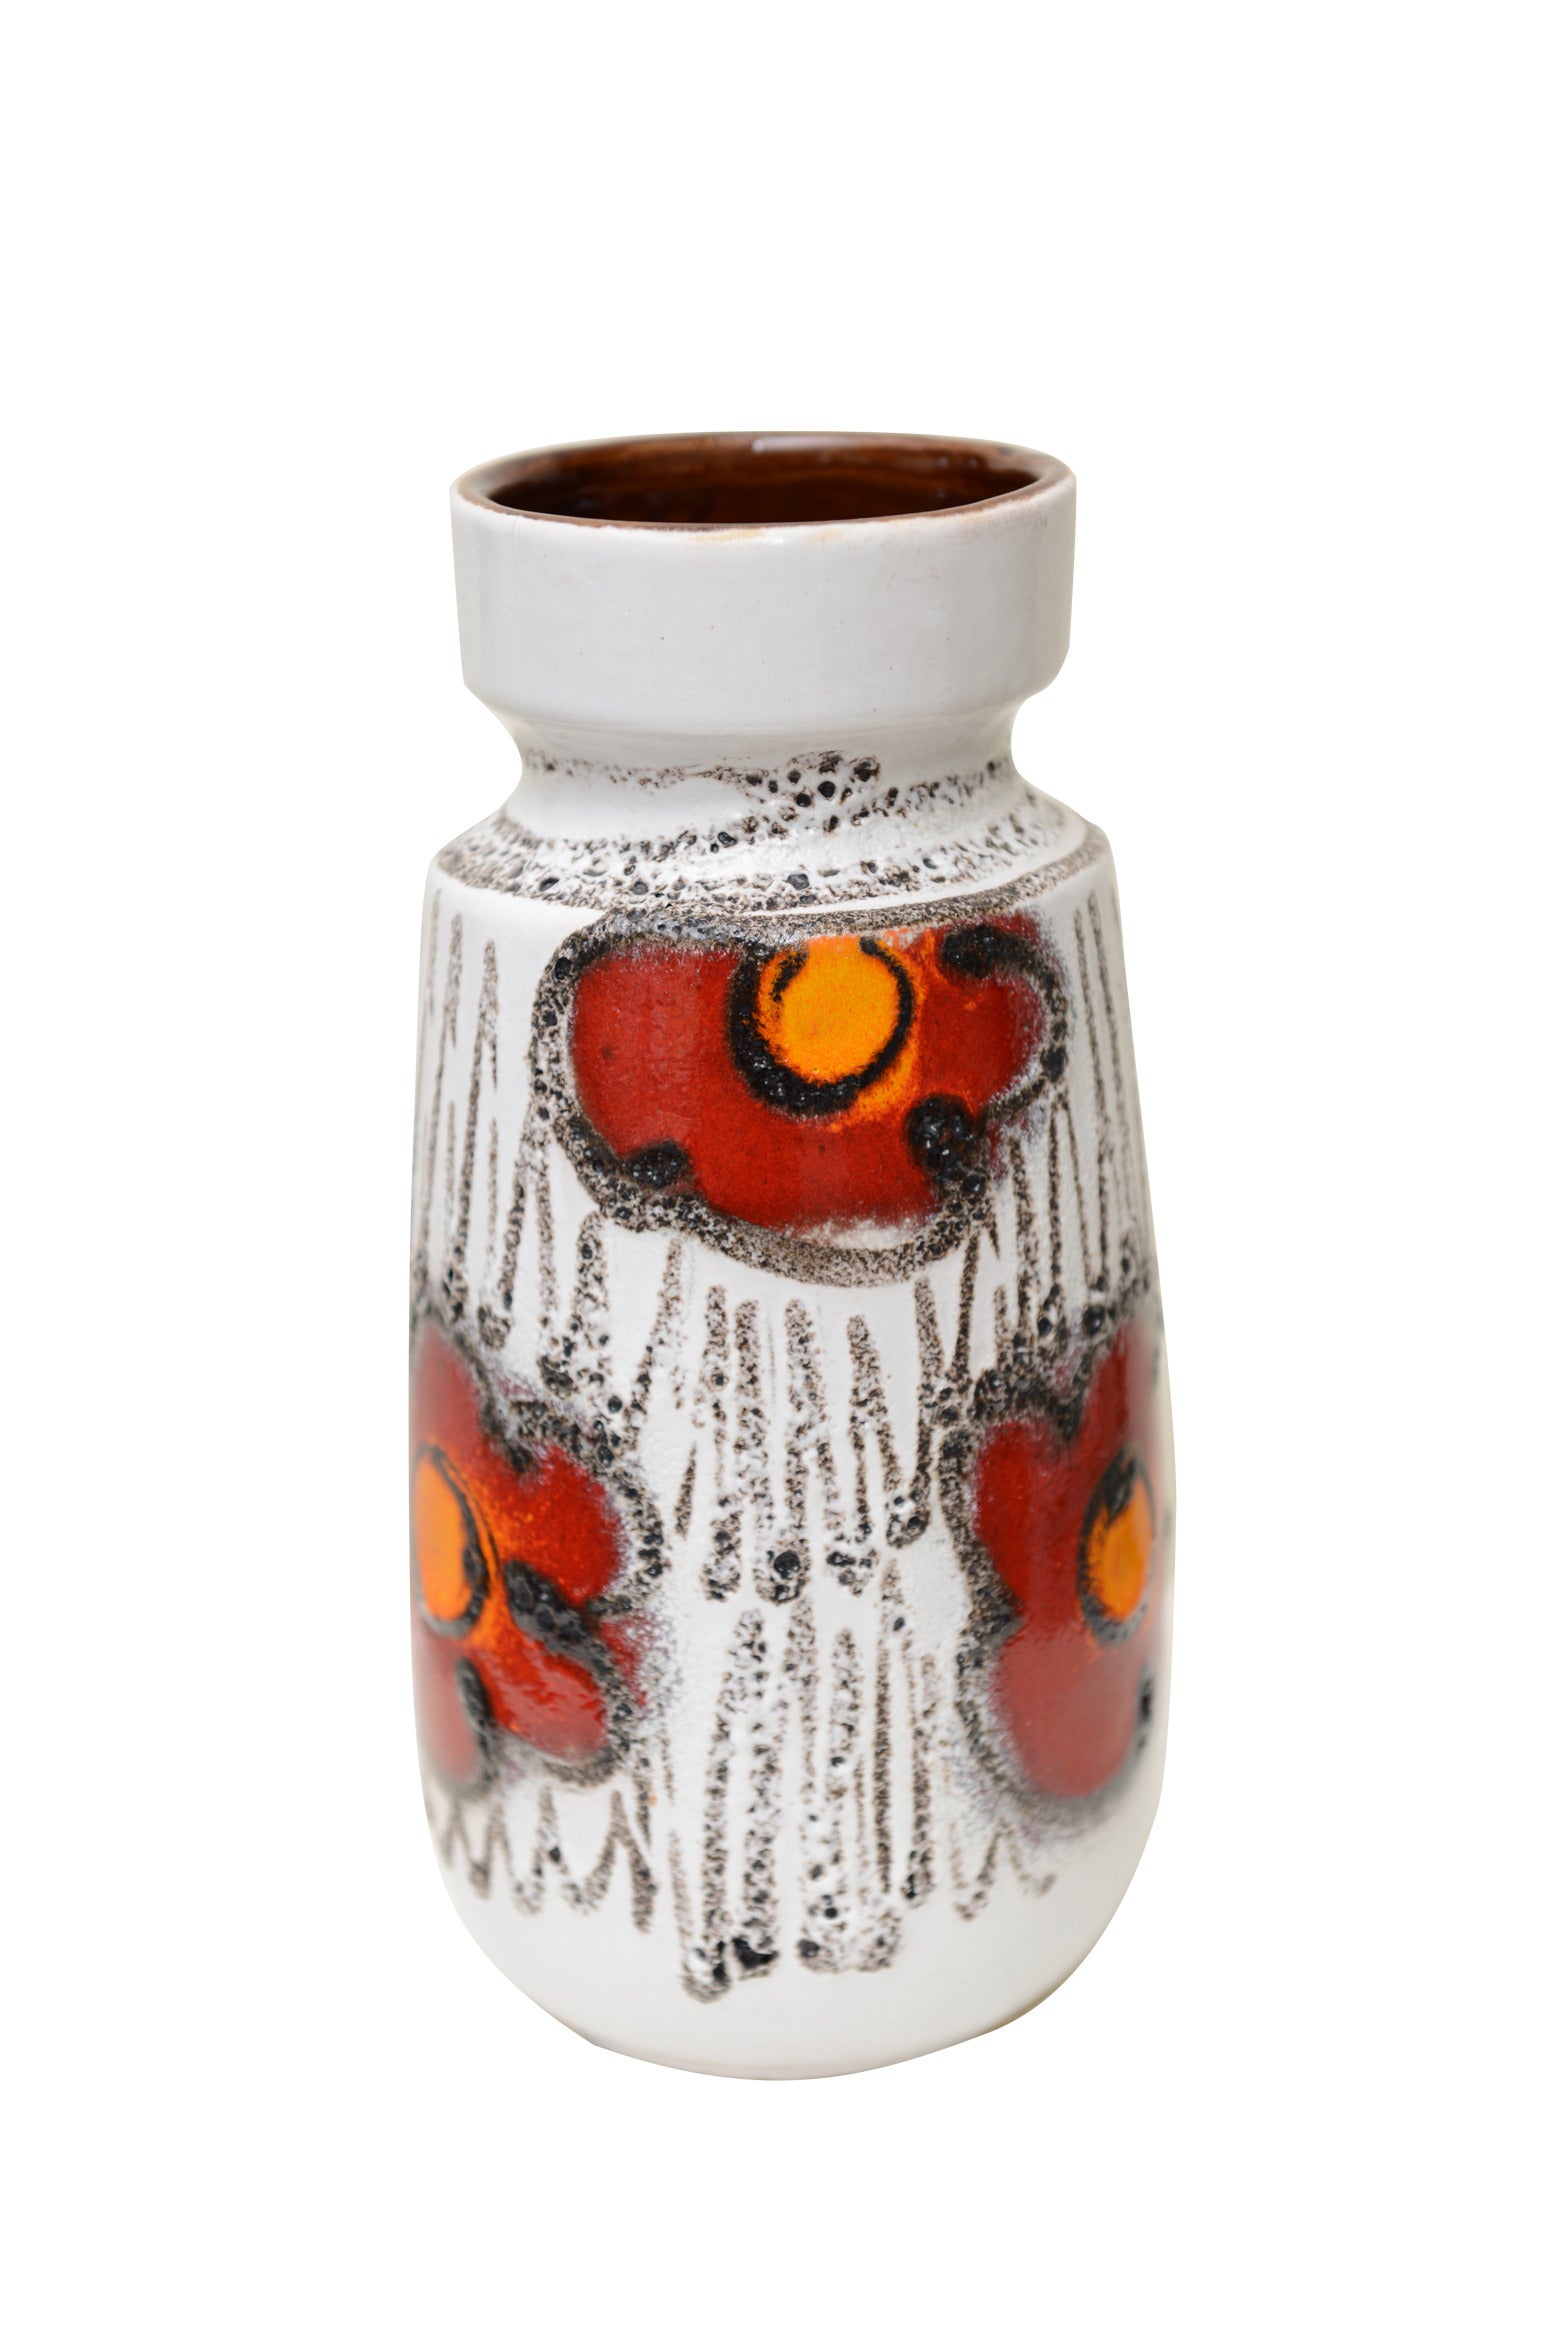 Delightful "Flower Power" Drip Glaze Ceramic Vase